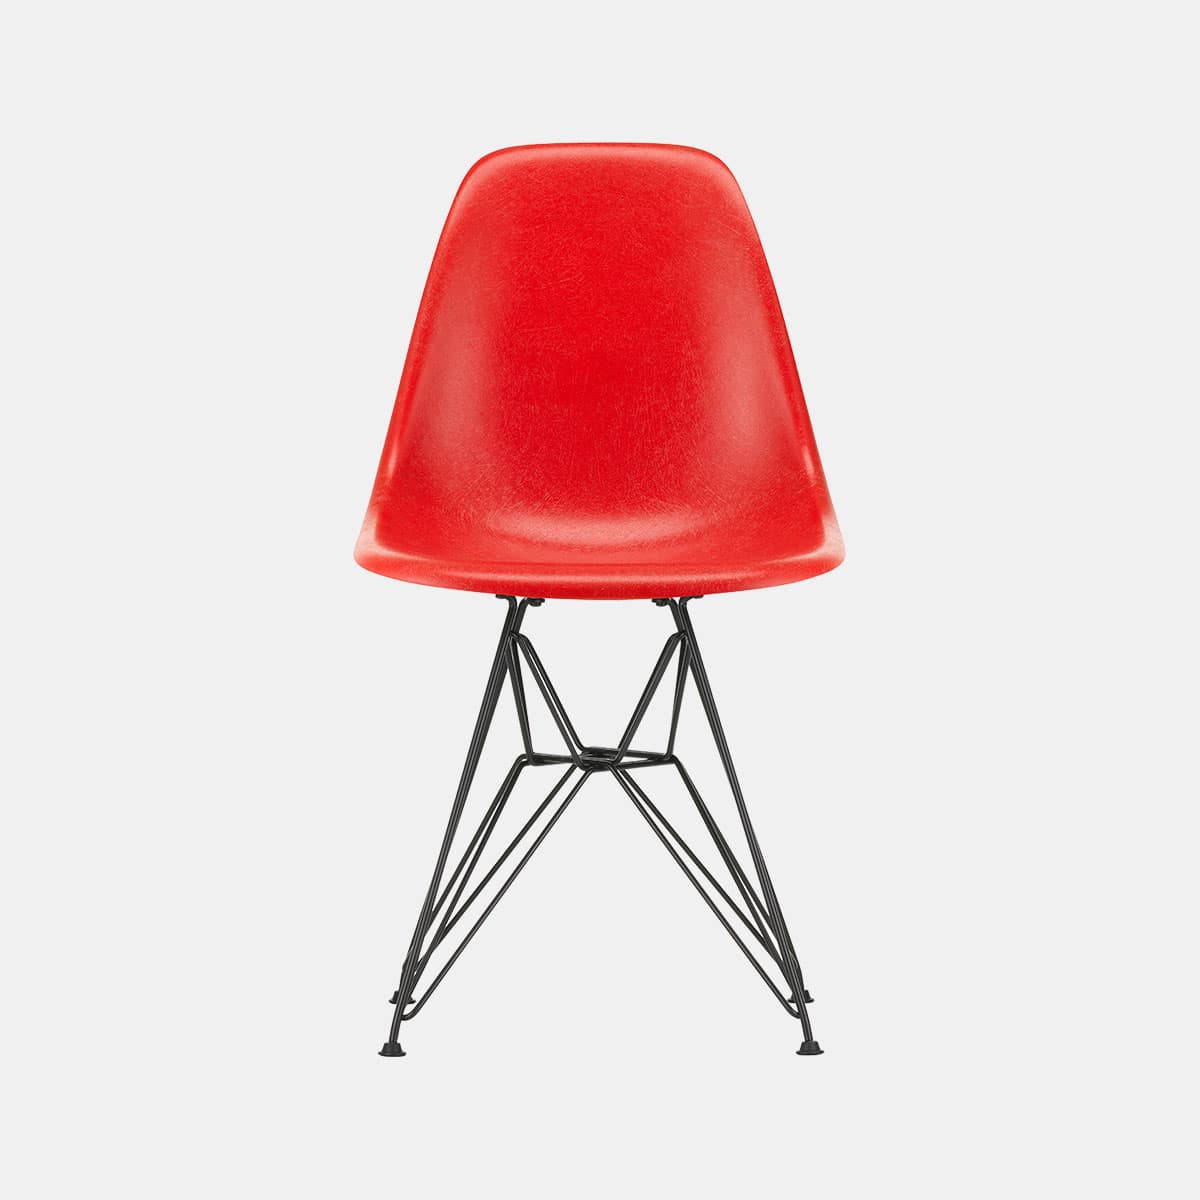 vitra-charles-ray-eames-fiberglass-side-chair-dsr-eames-classic-red-basic-dark-001shop